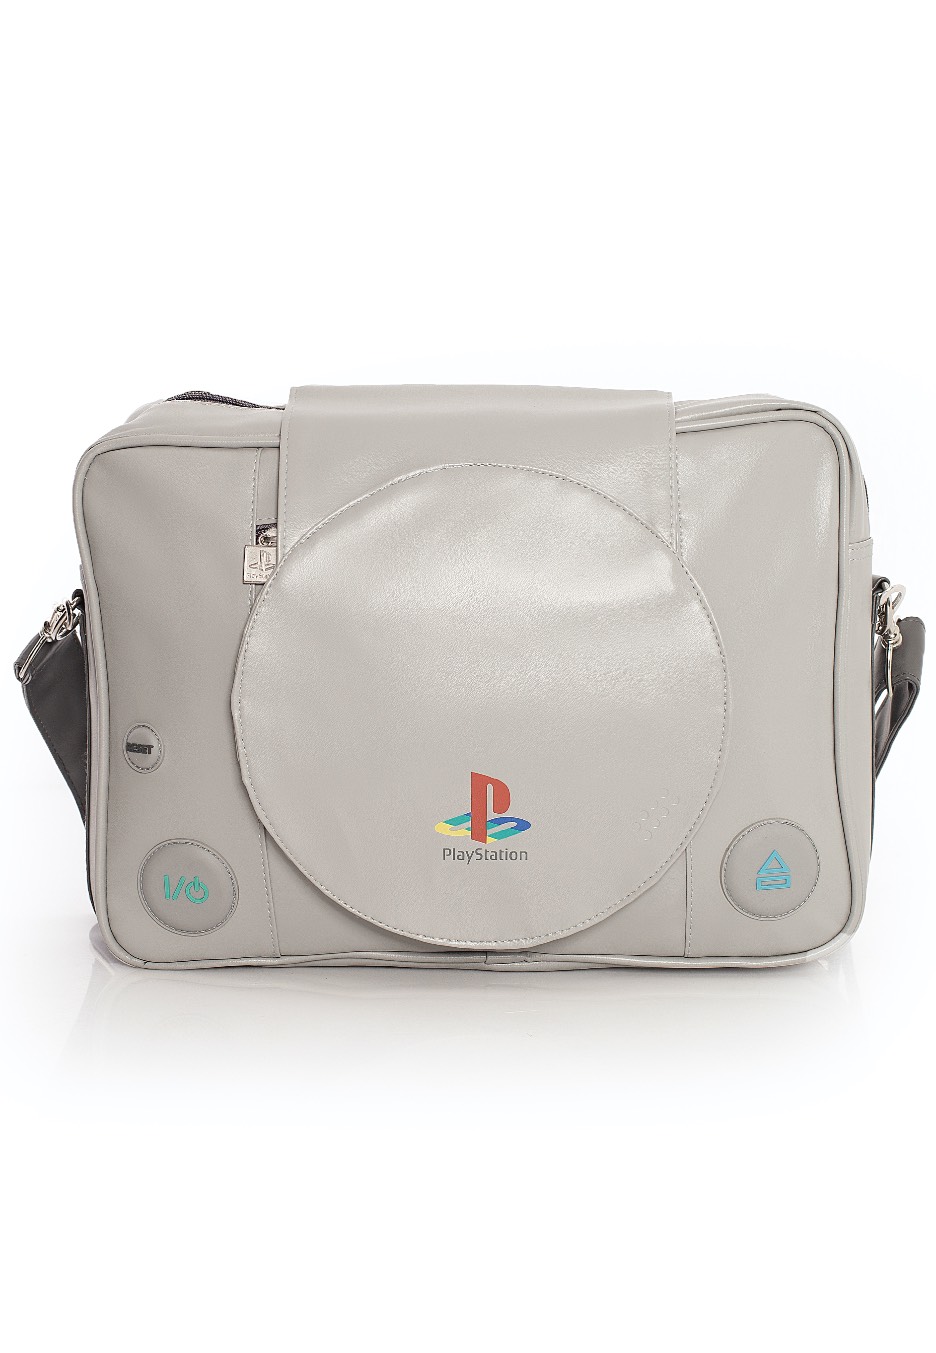 Playstation - Shaped Playstation - Taschen